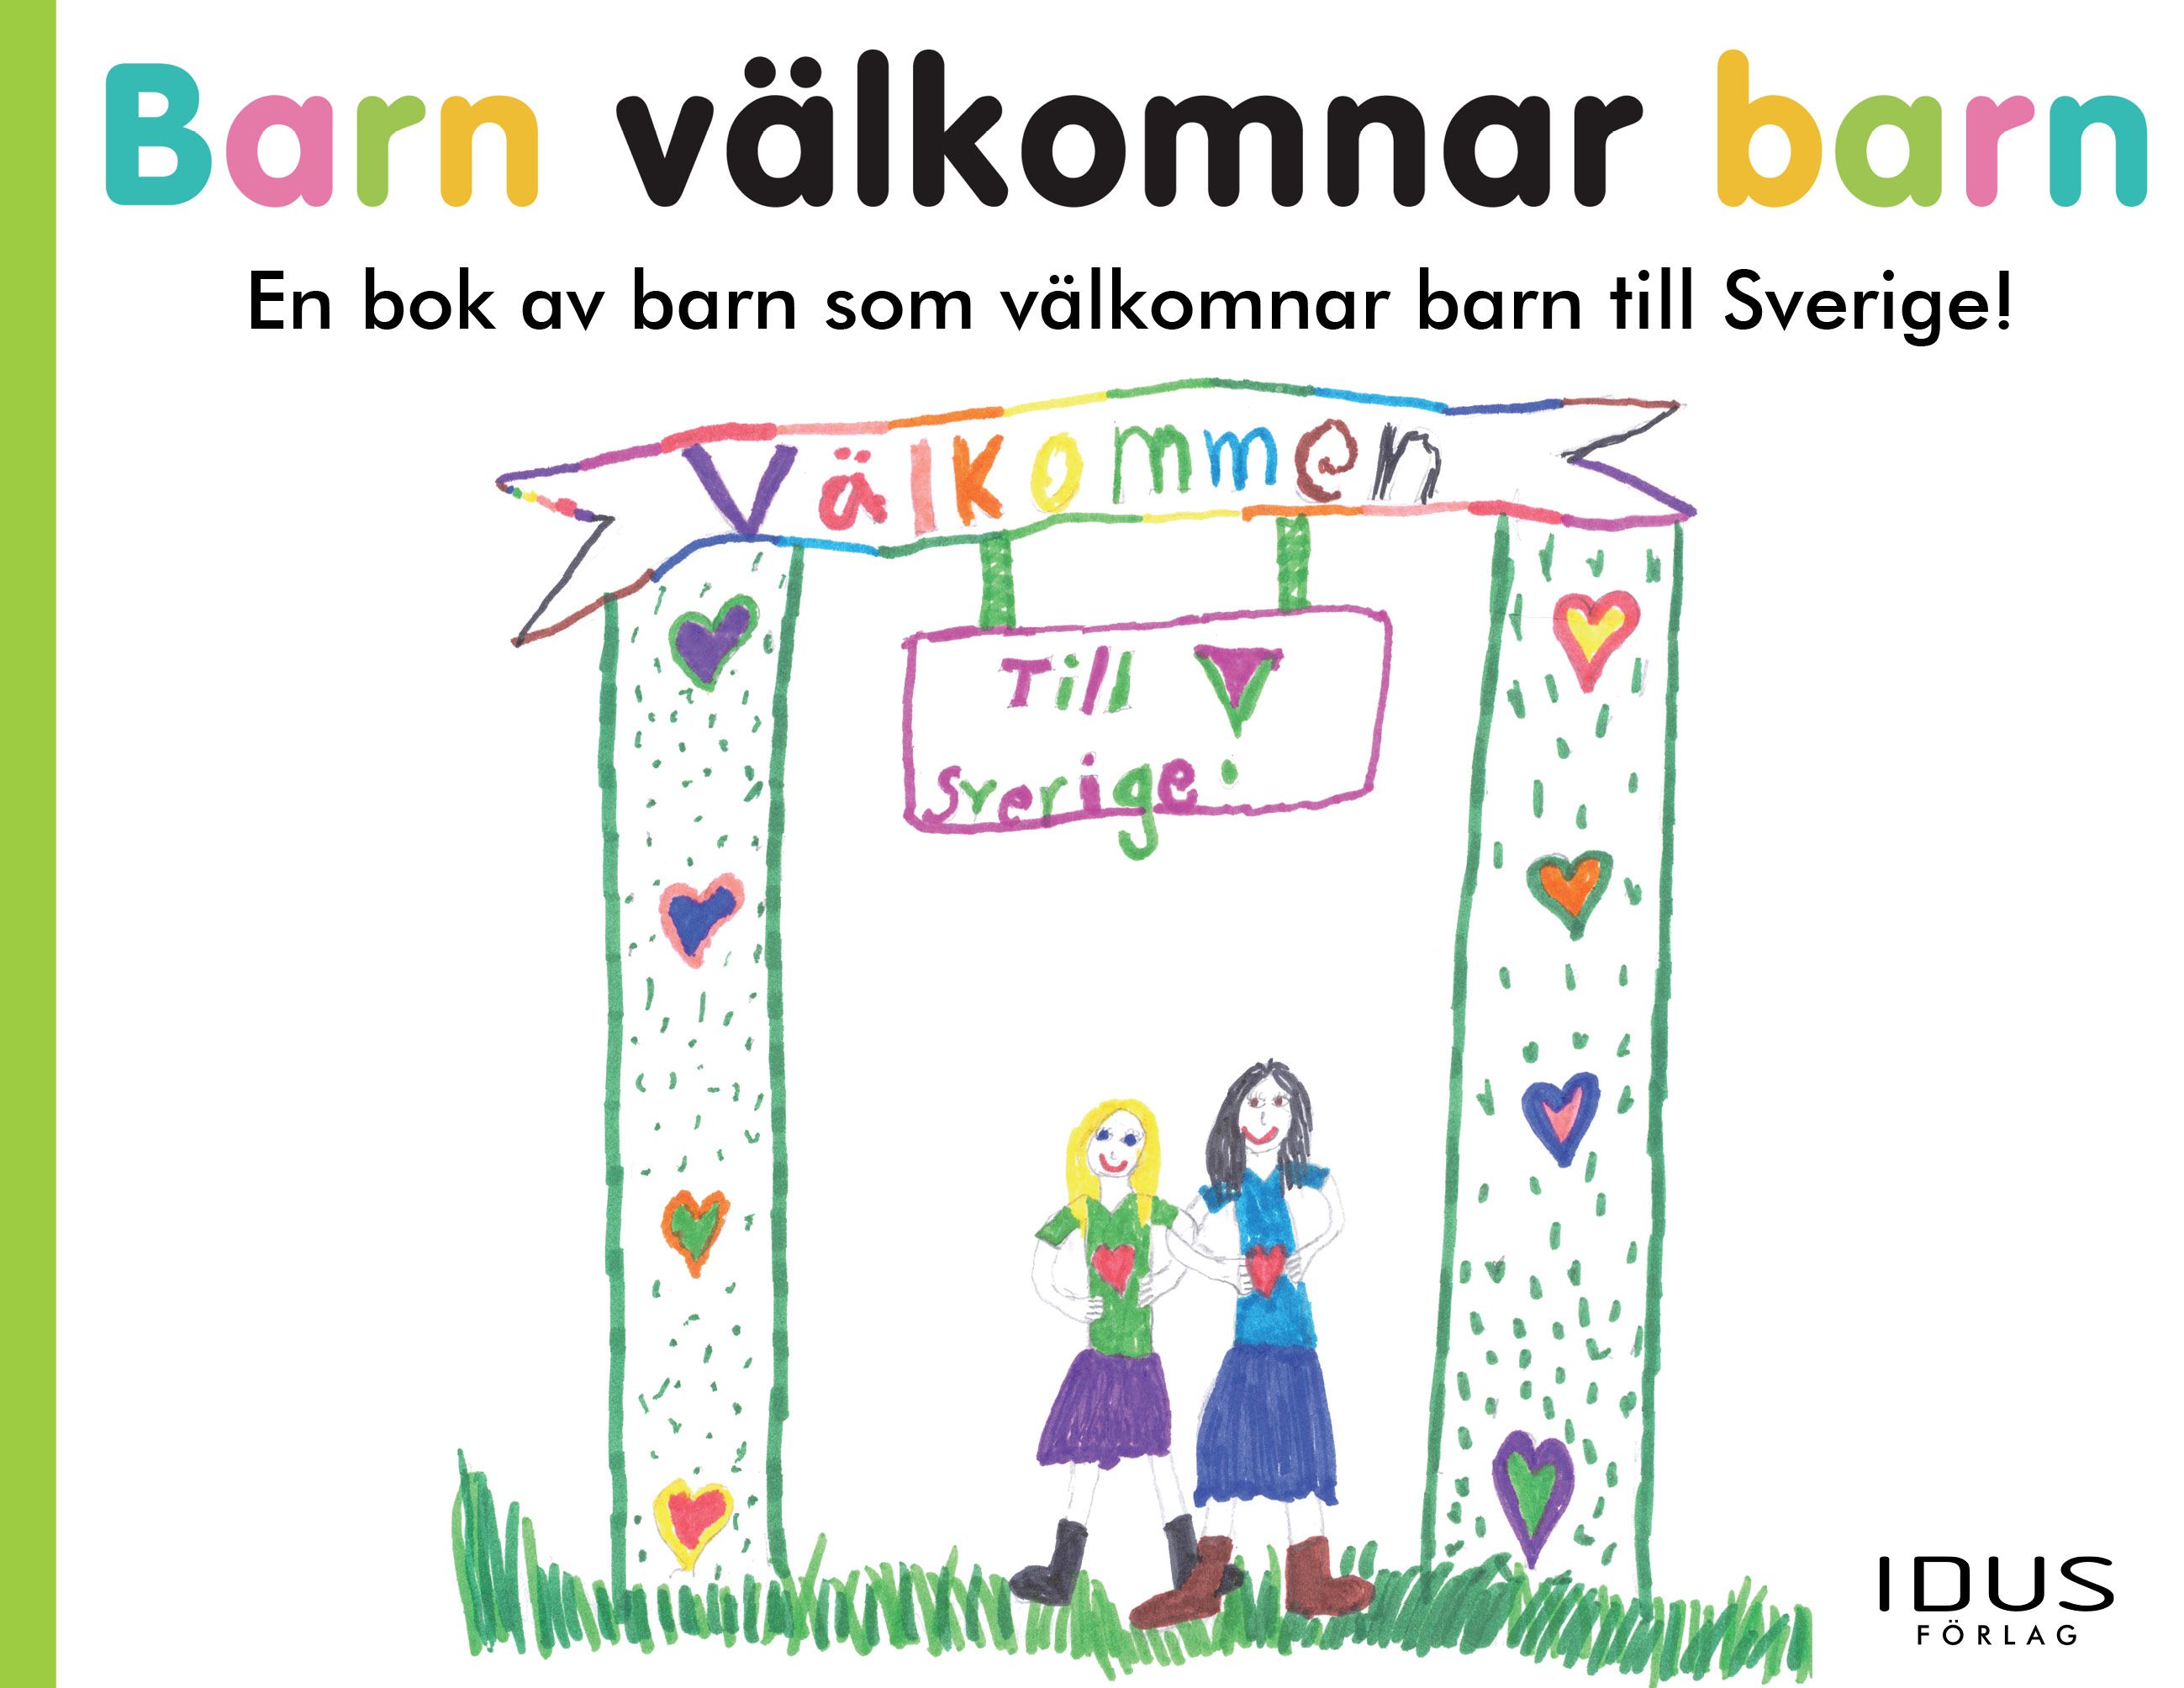 Barn välkomnar barn, e-bog af Sveriges barn